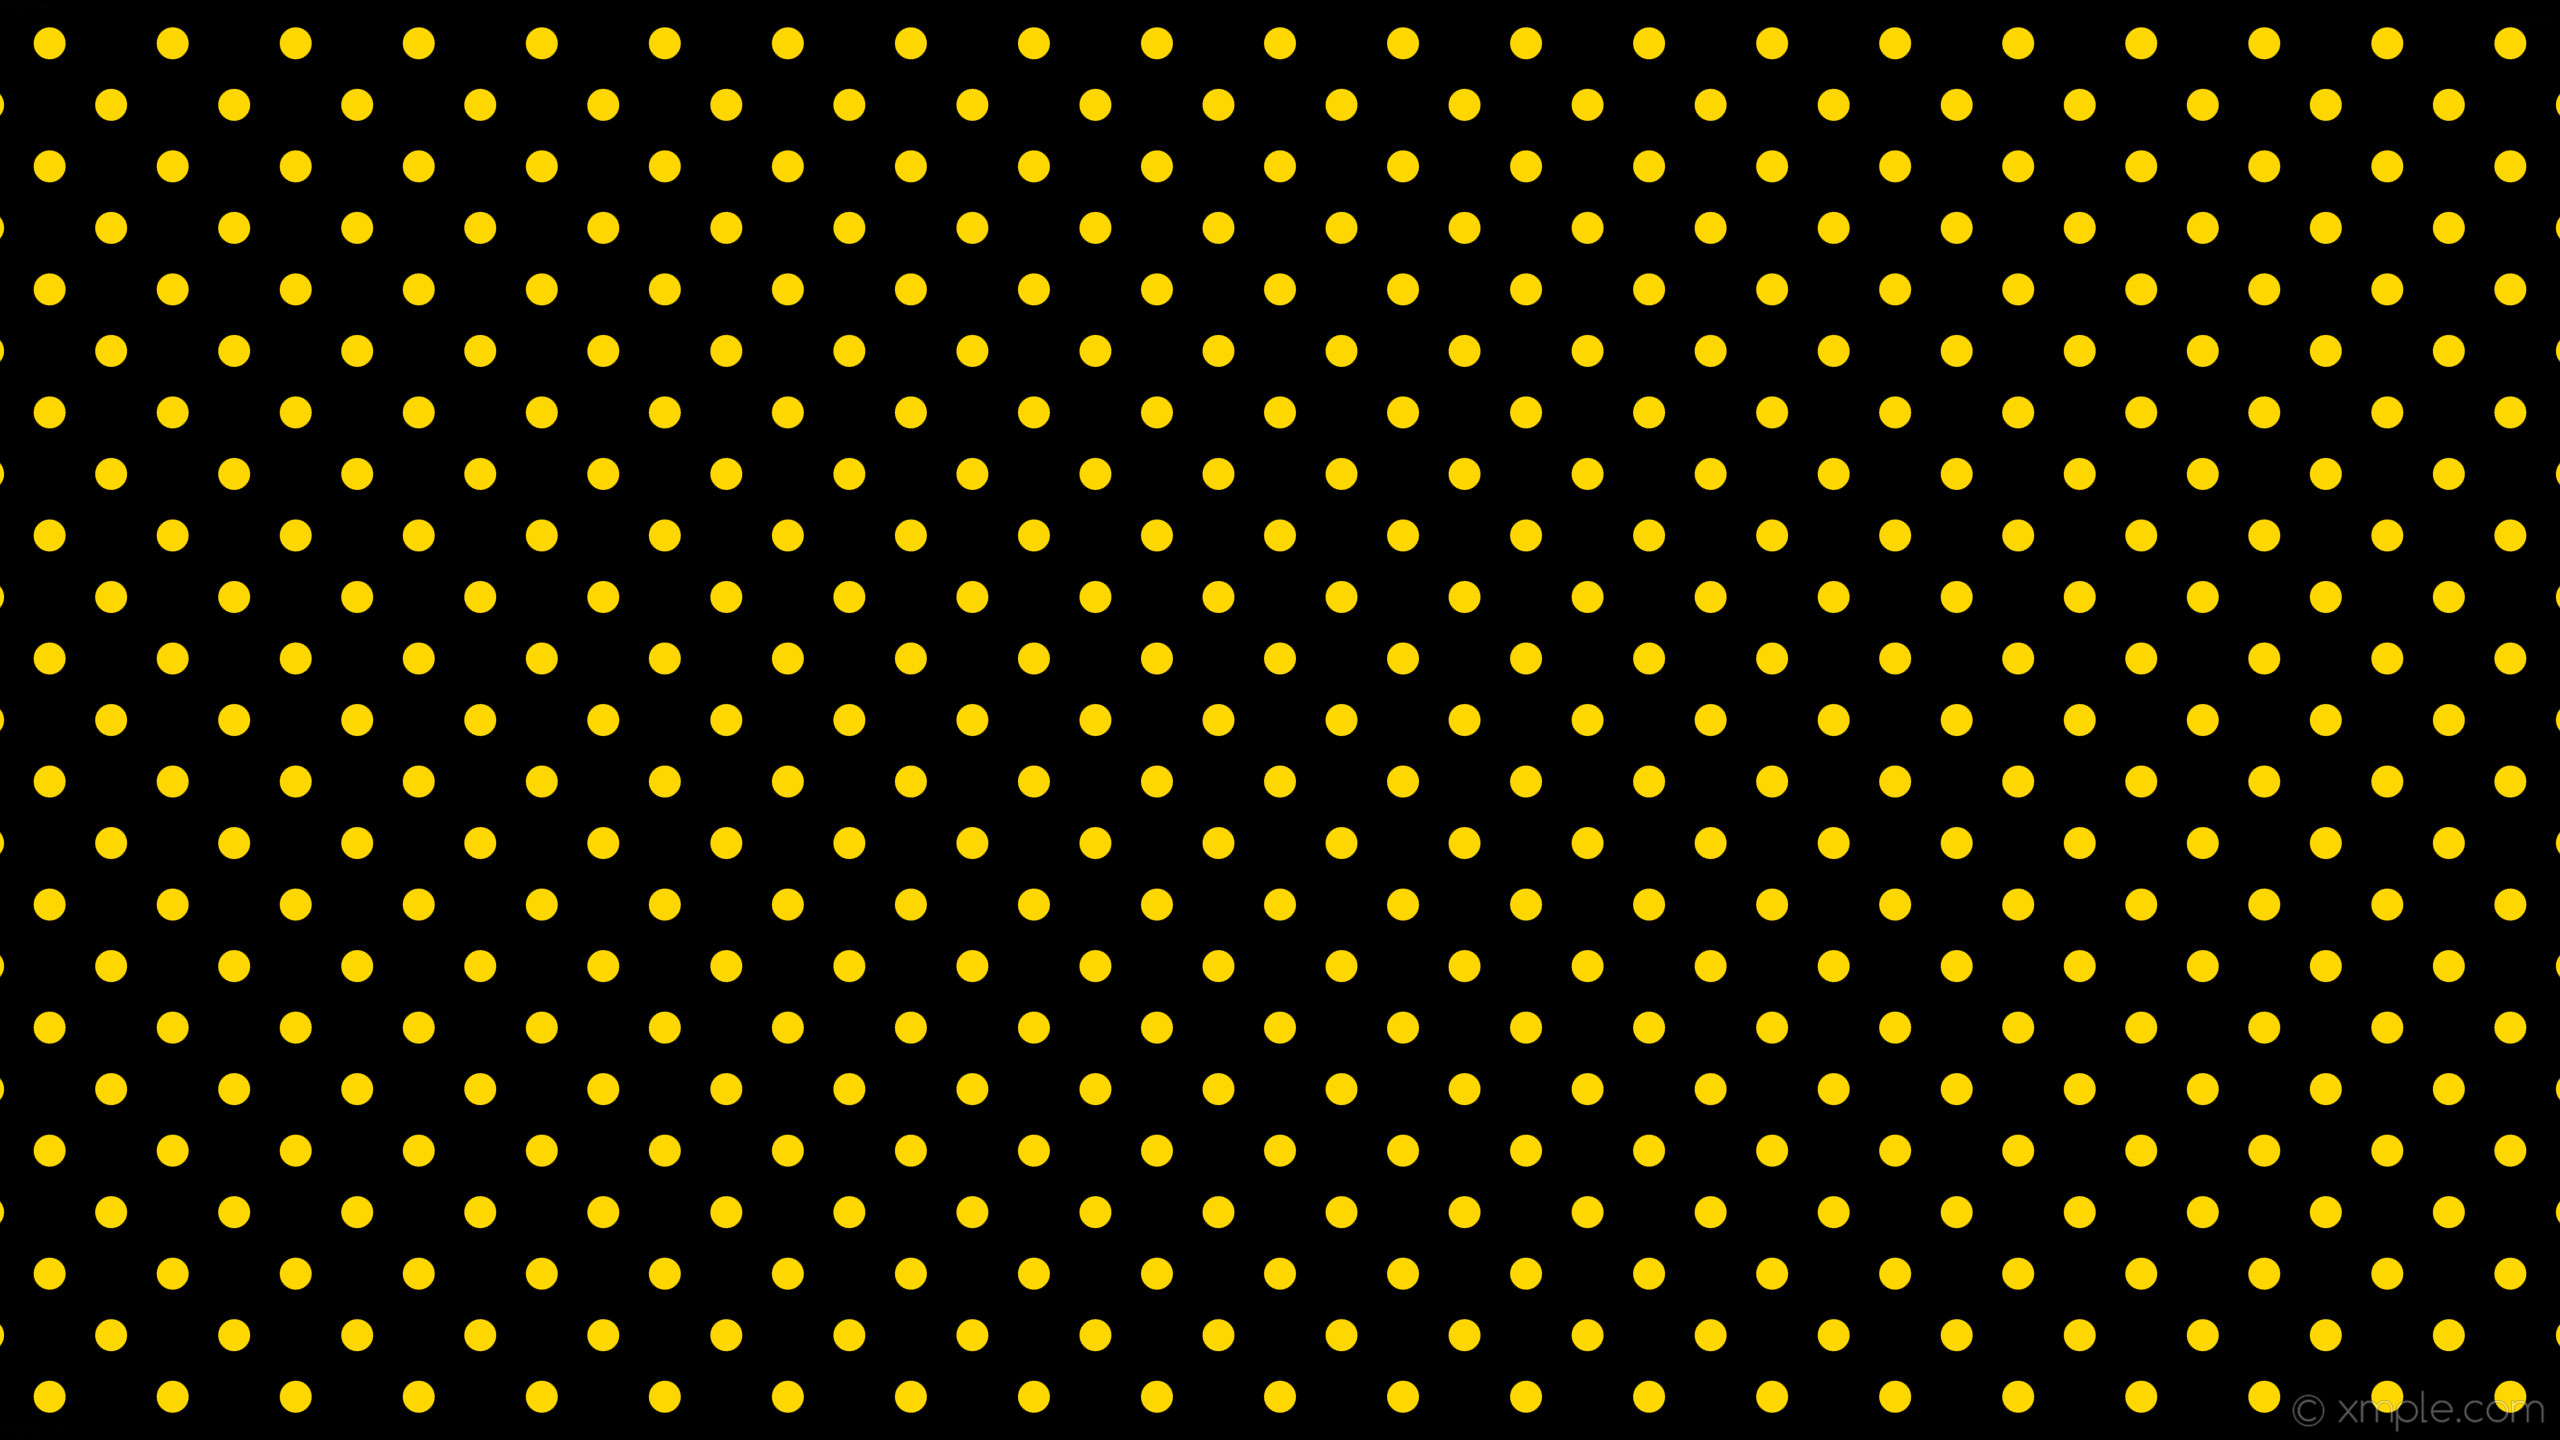 2560x1440 wallpaper spots black yellow polka dots gold #000000 #ffd700 135Â° 32px 87px